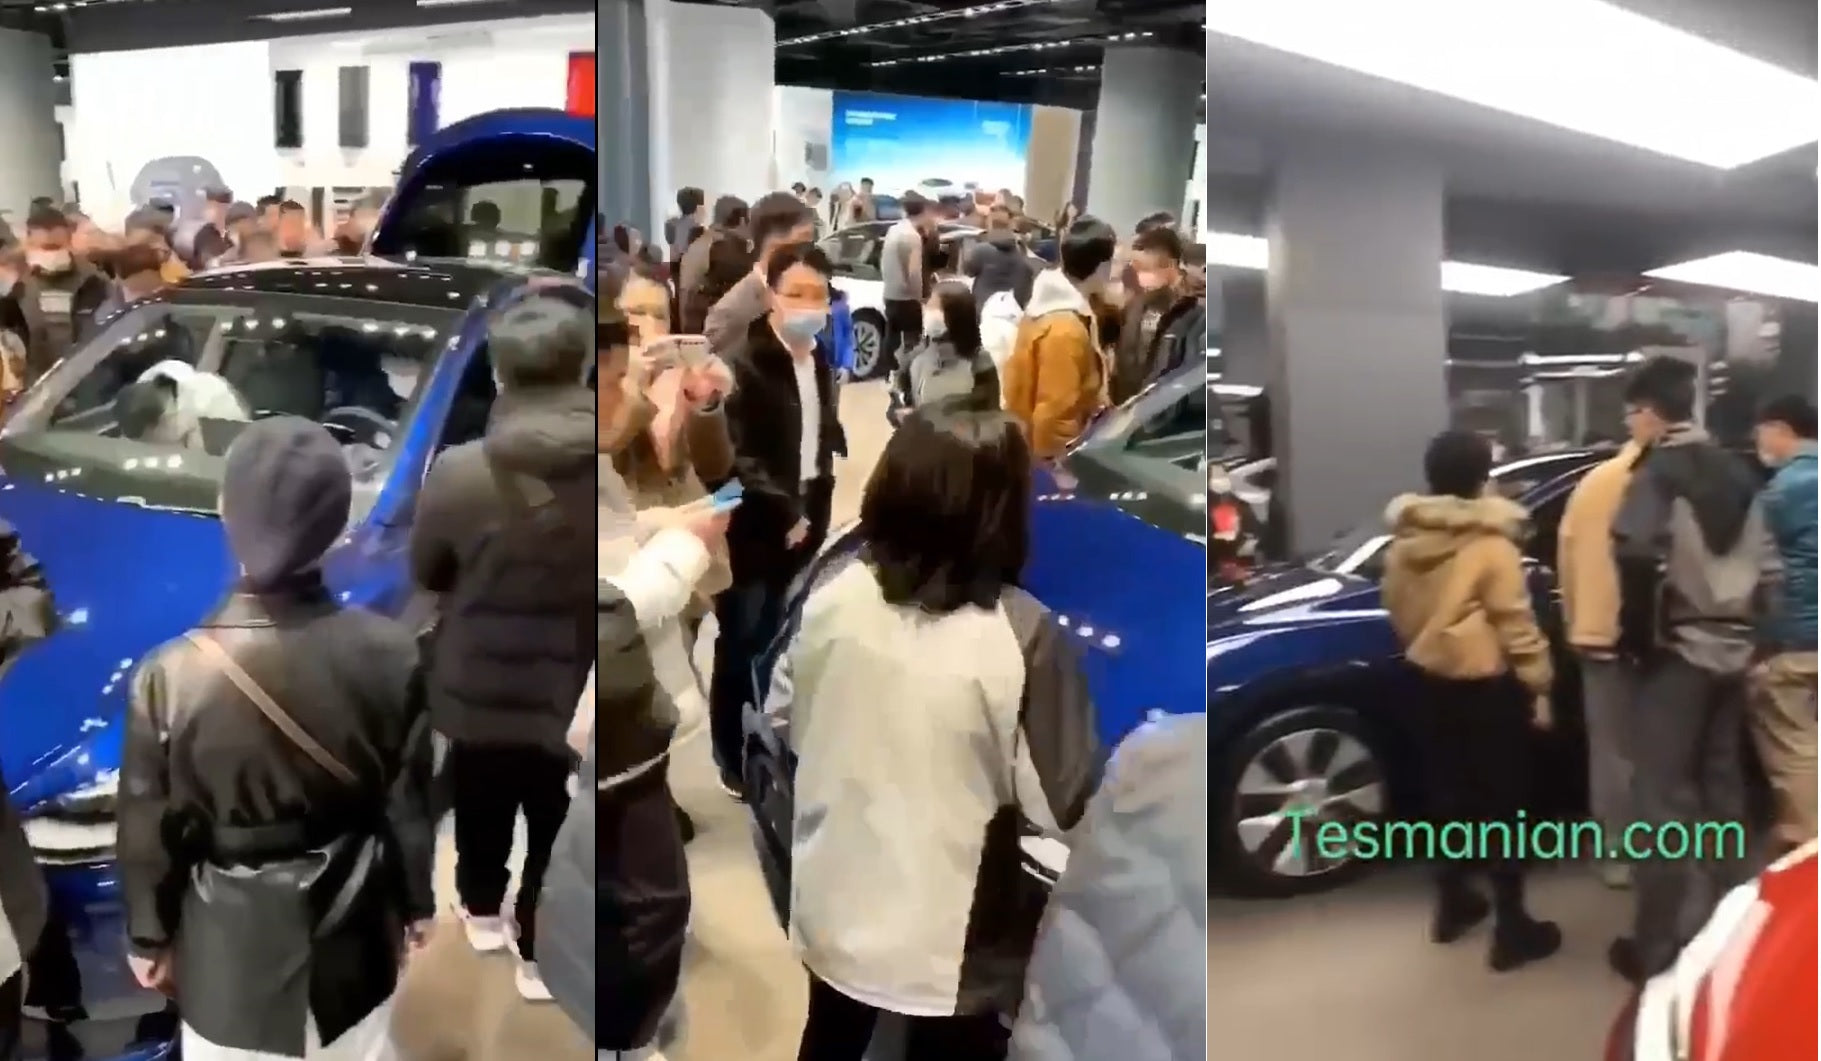 Tesla Giga Shanghai Model Y Drives Insane Interest in China & Black Friday Like Stir at All Stores